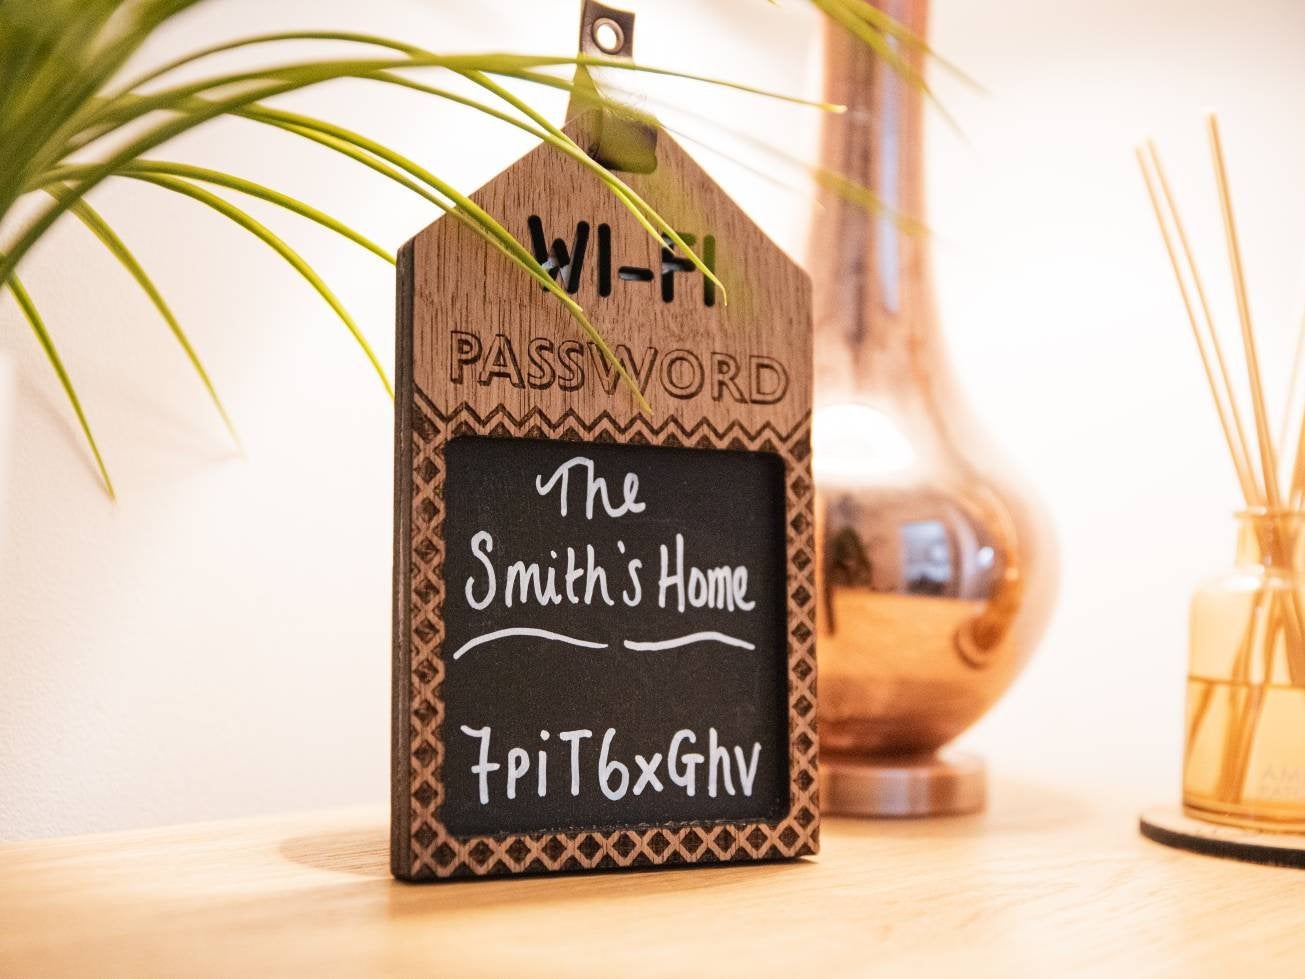 WiFi Password Sign | Wooden Hanging Blackboard Sign | Home WiFi | Guest WiFi | Entrance Hall Decor | Hotel Guest WiFi | WiFi Chalkboard